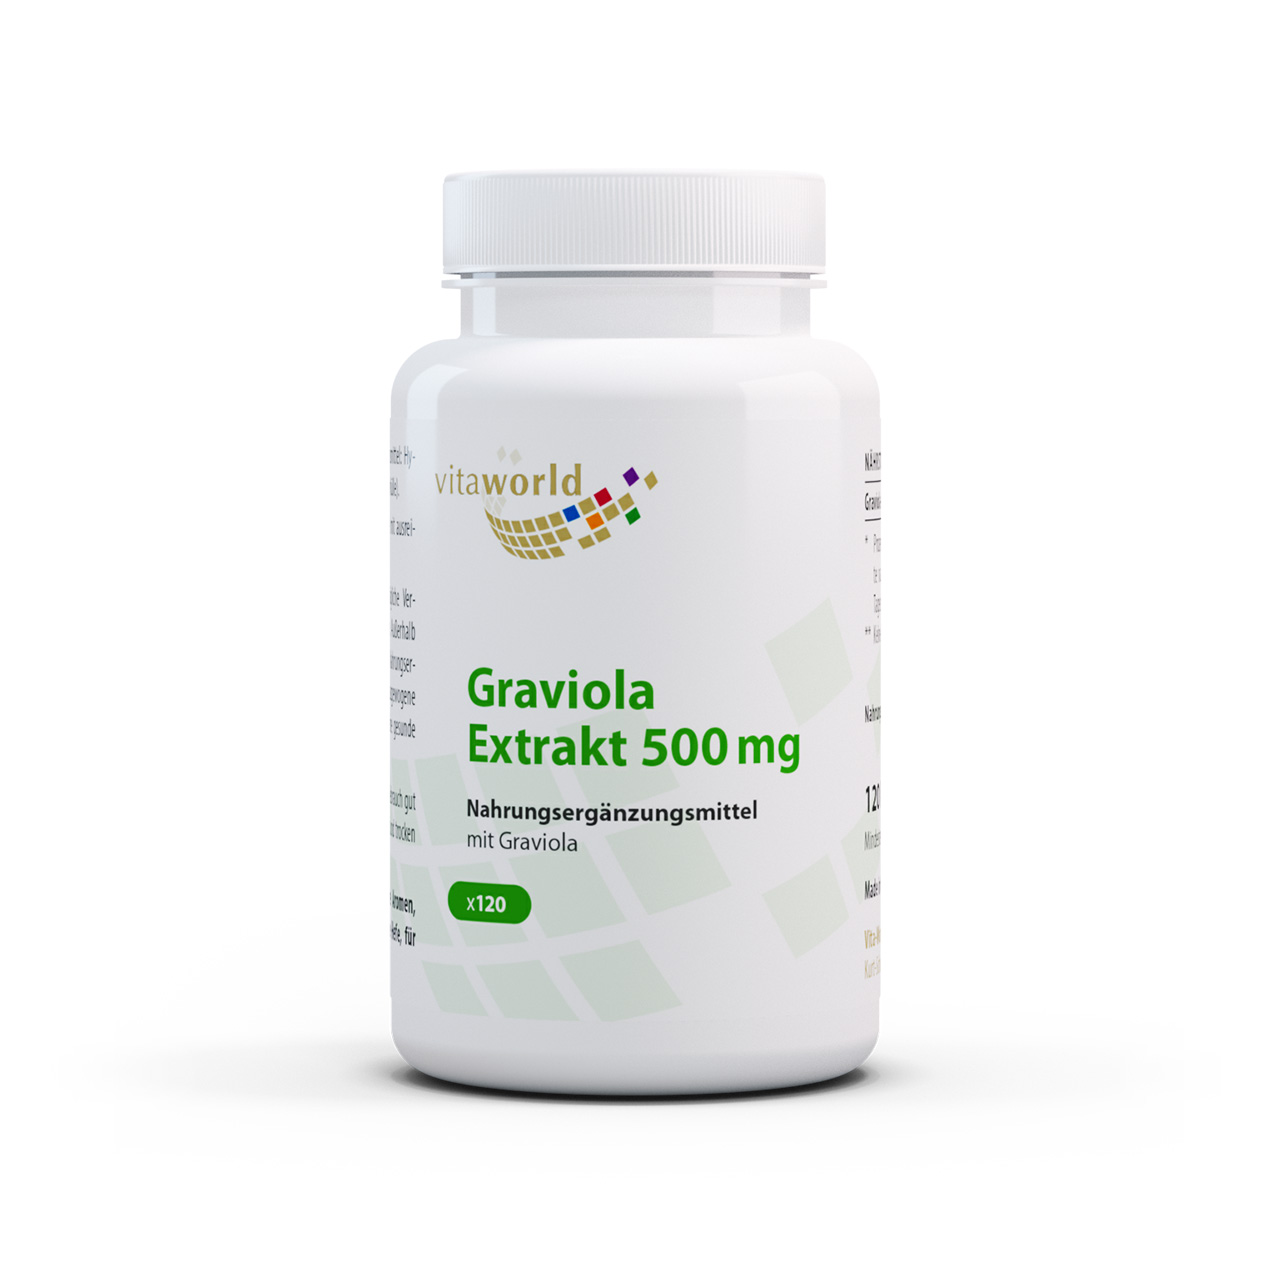 Vita World Graviola Extrakt 500 mg | 120 Kapseln | hochdosiert | vegan